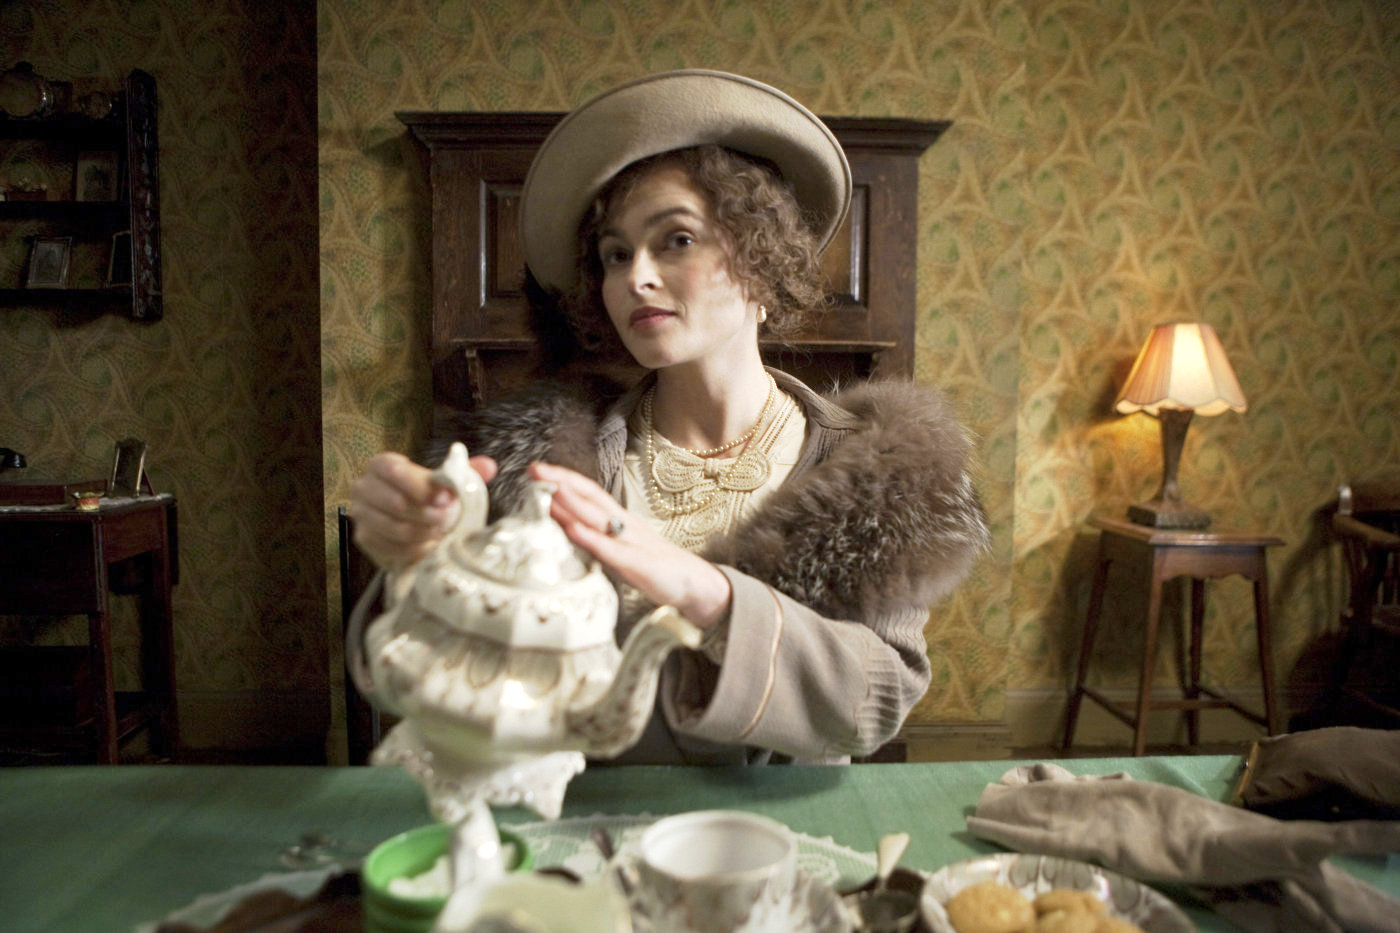 Helena Bonham Carter stars as Queen Elizabeth in The Weinstein Company's The King's Speech (2010)